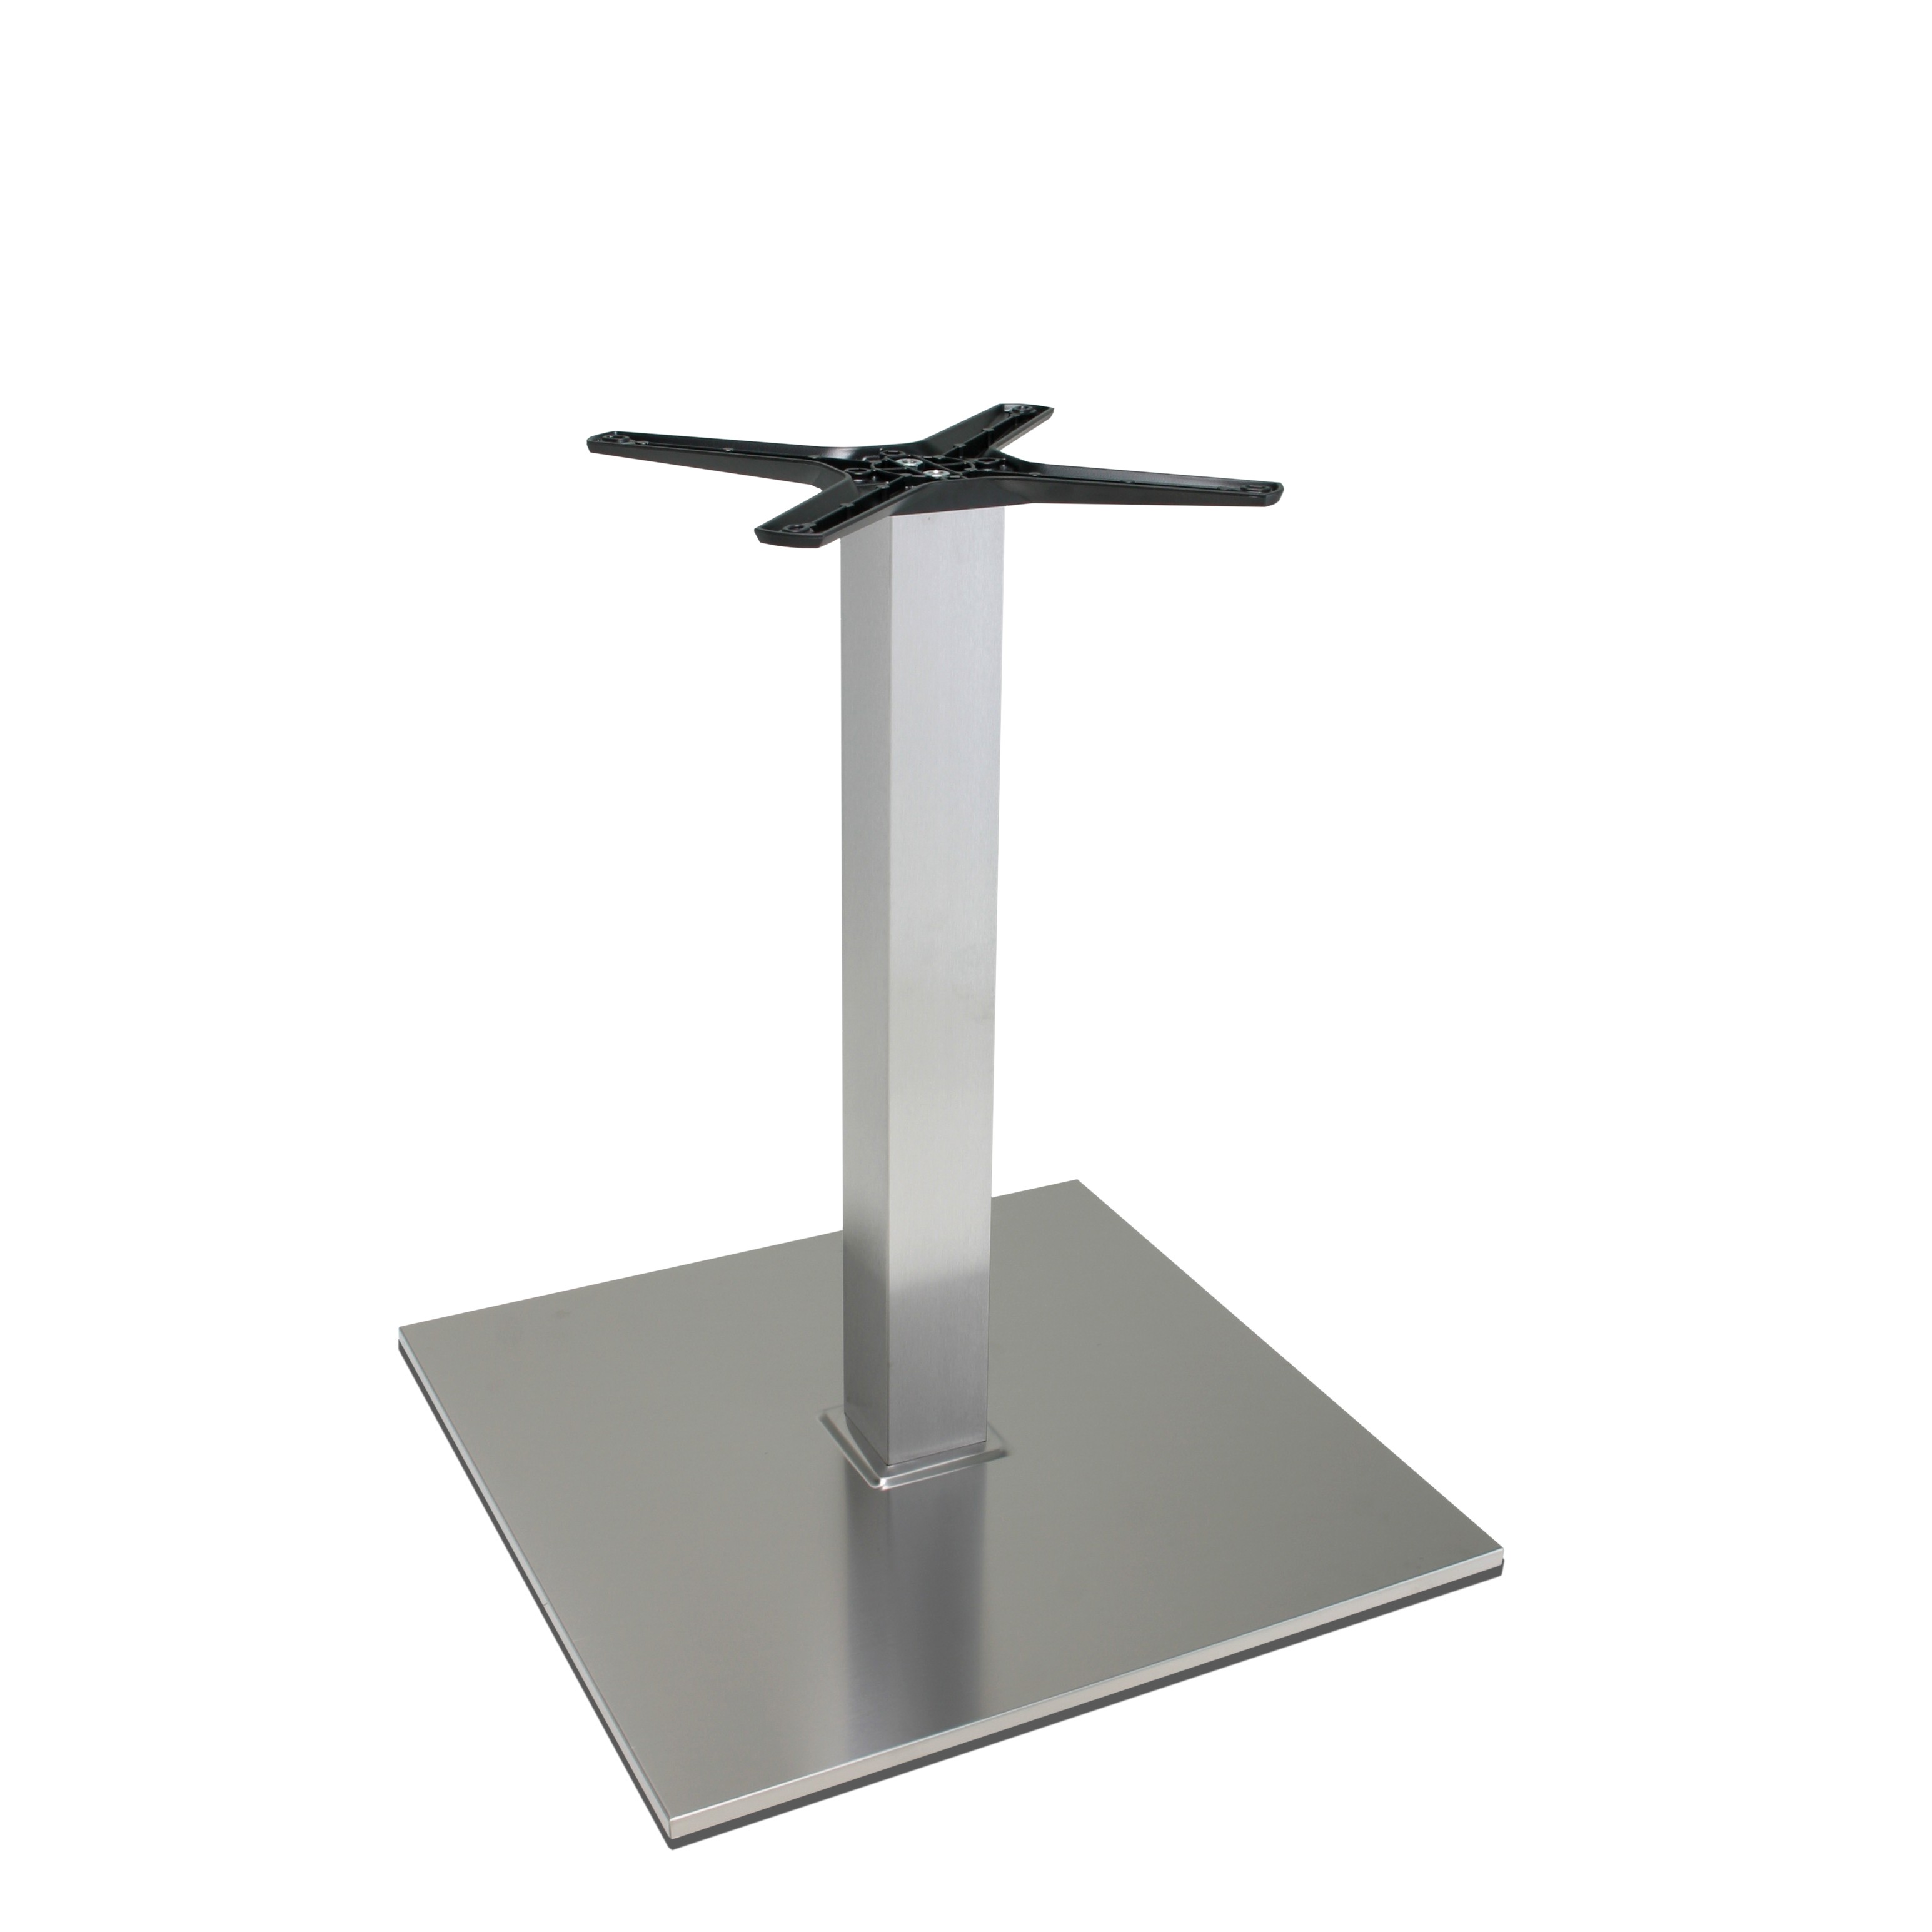 Edelstahl Tischgestell P400BQinox (Nirosta), satiniert-matt, quadratisch